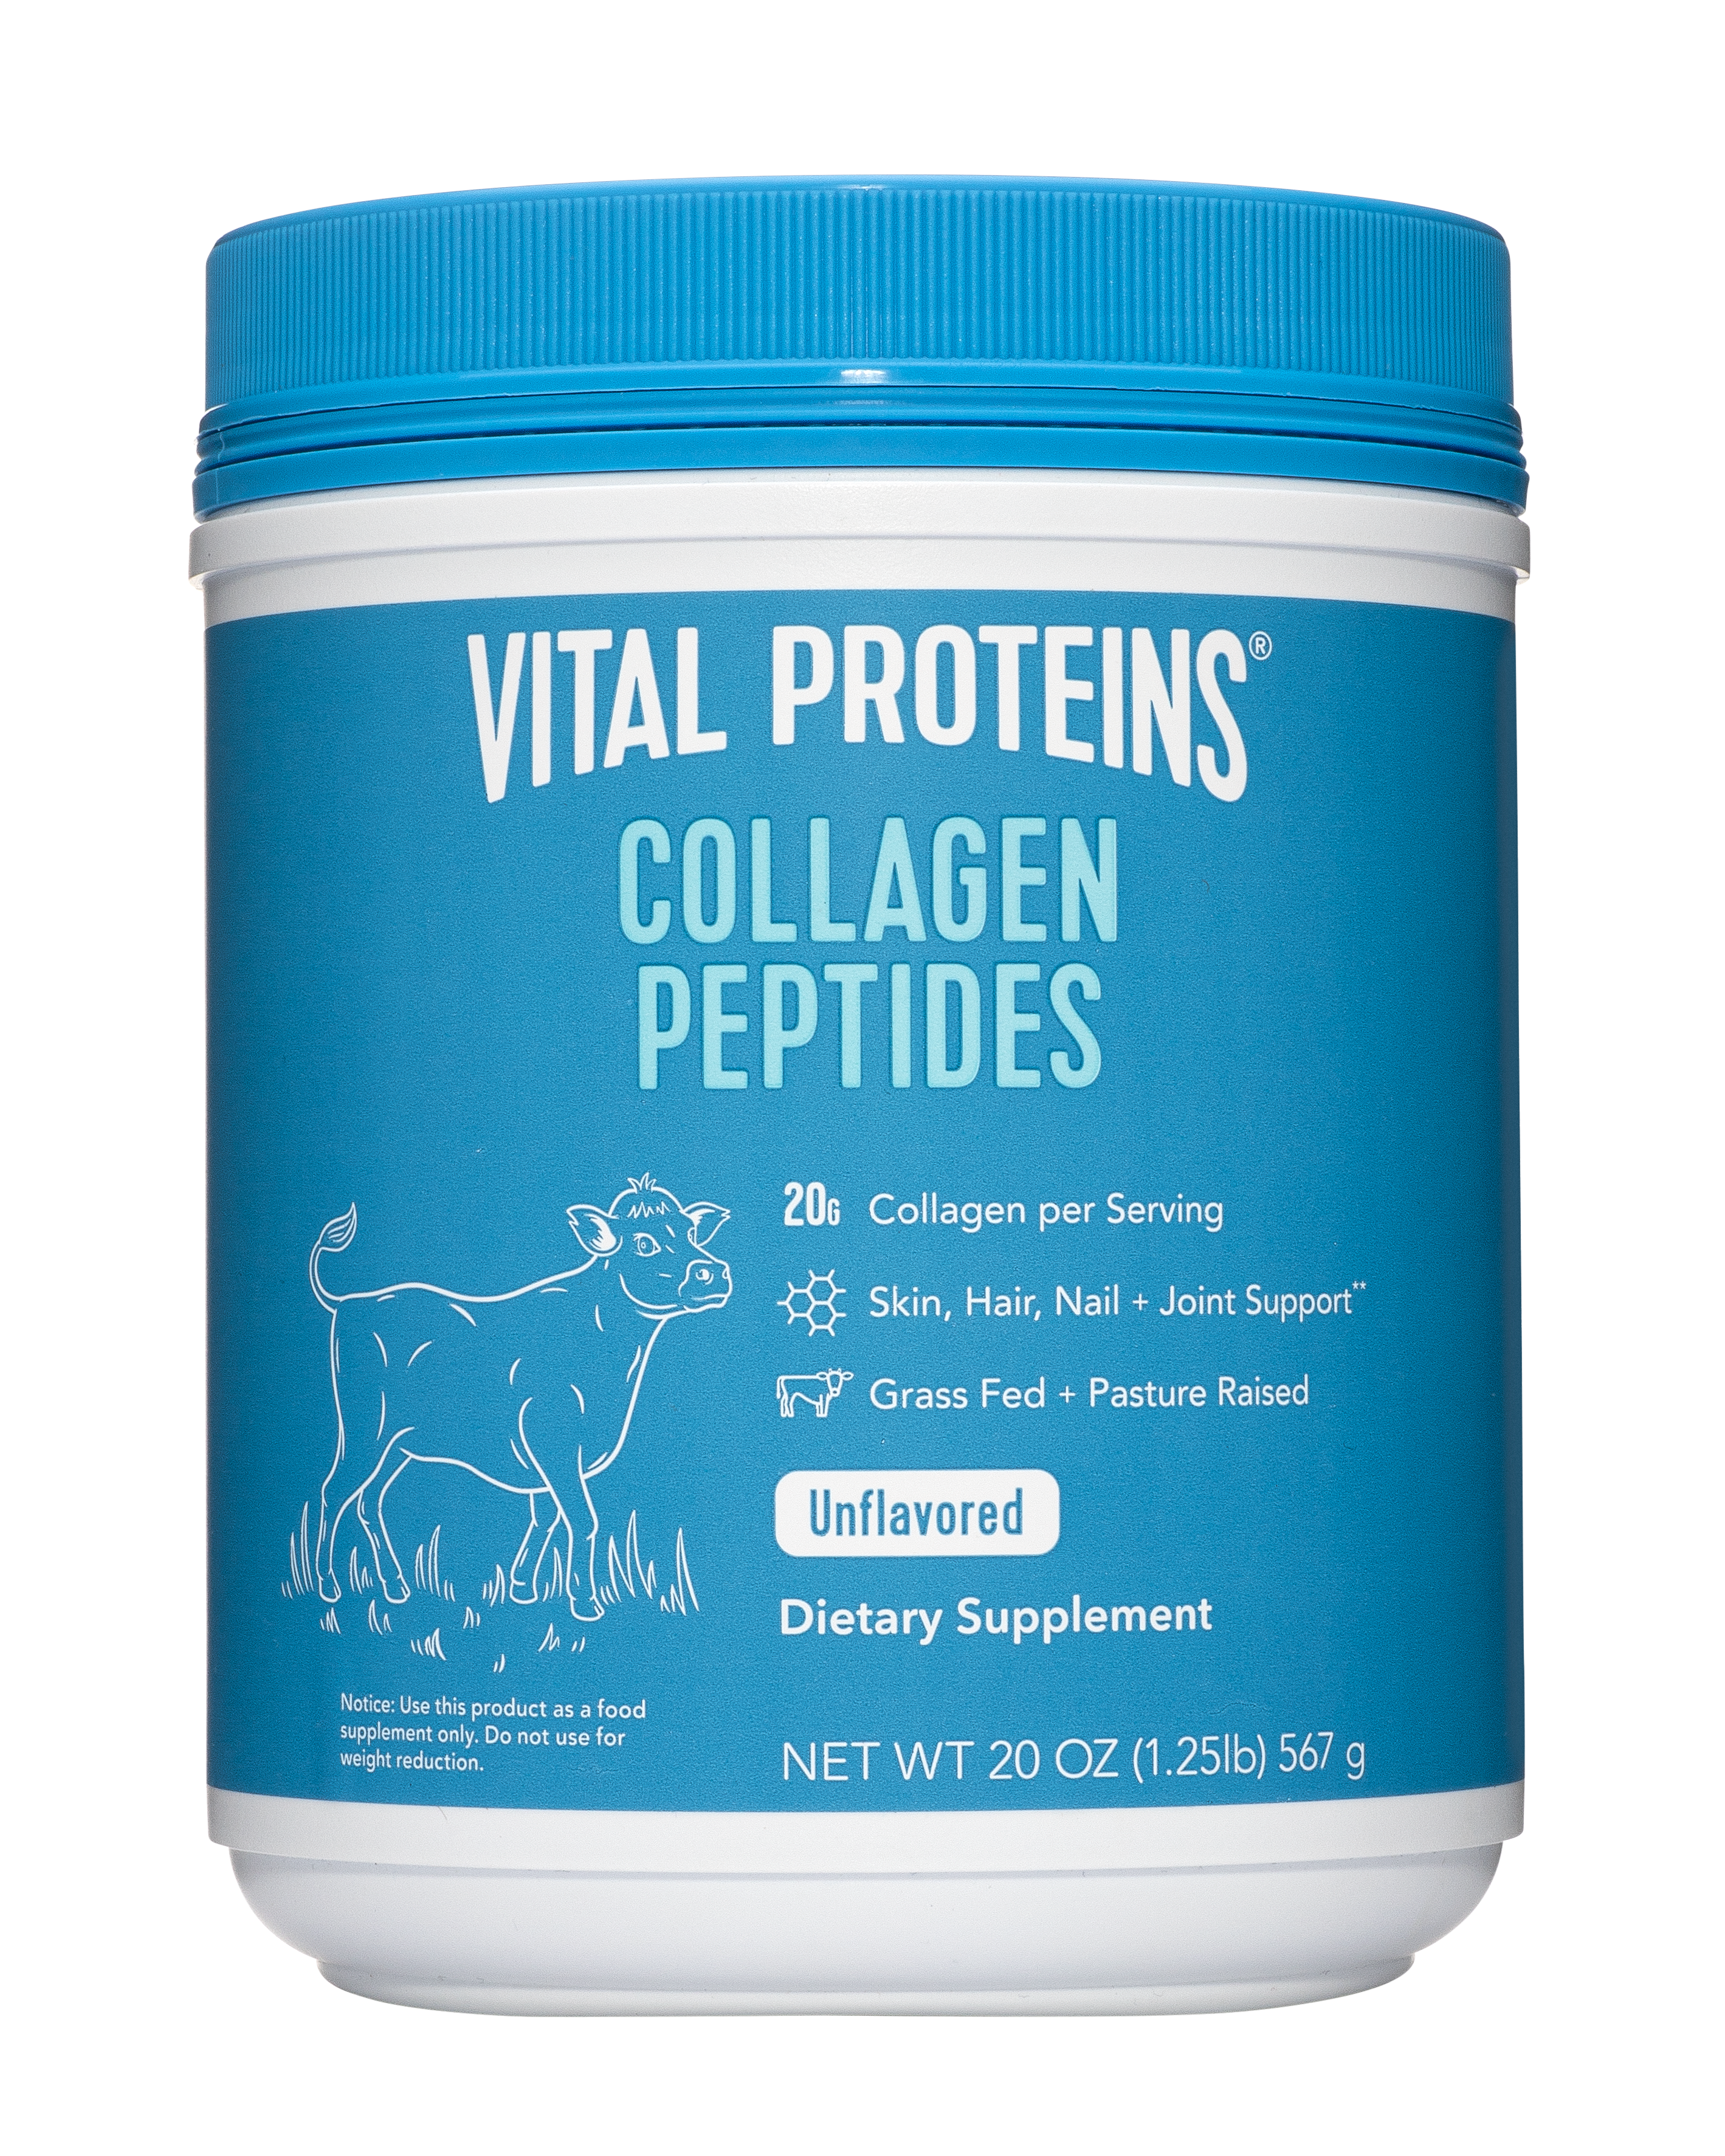 Buy Vital Proteins Collagen Peptides Powder